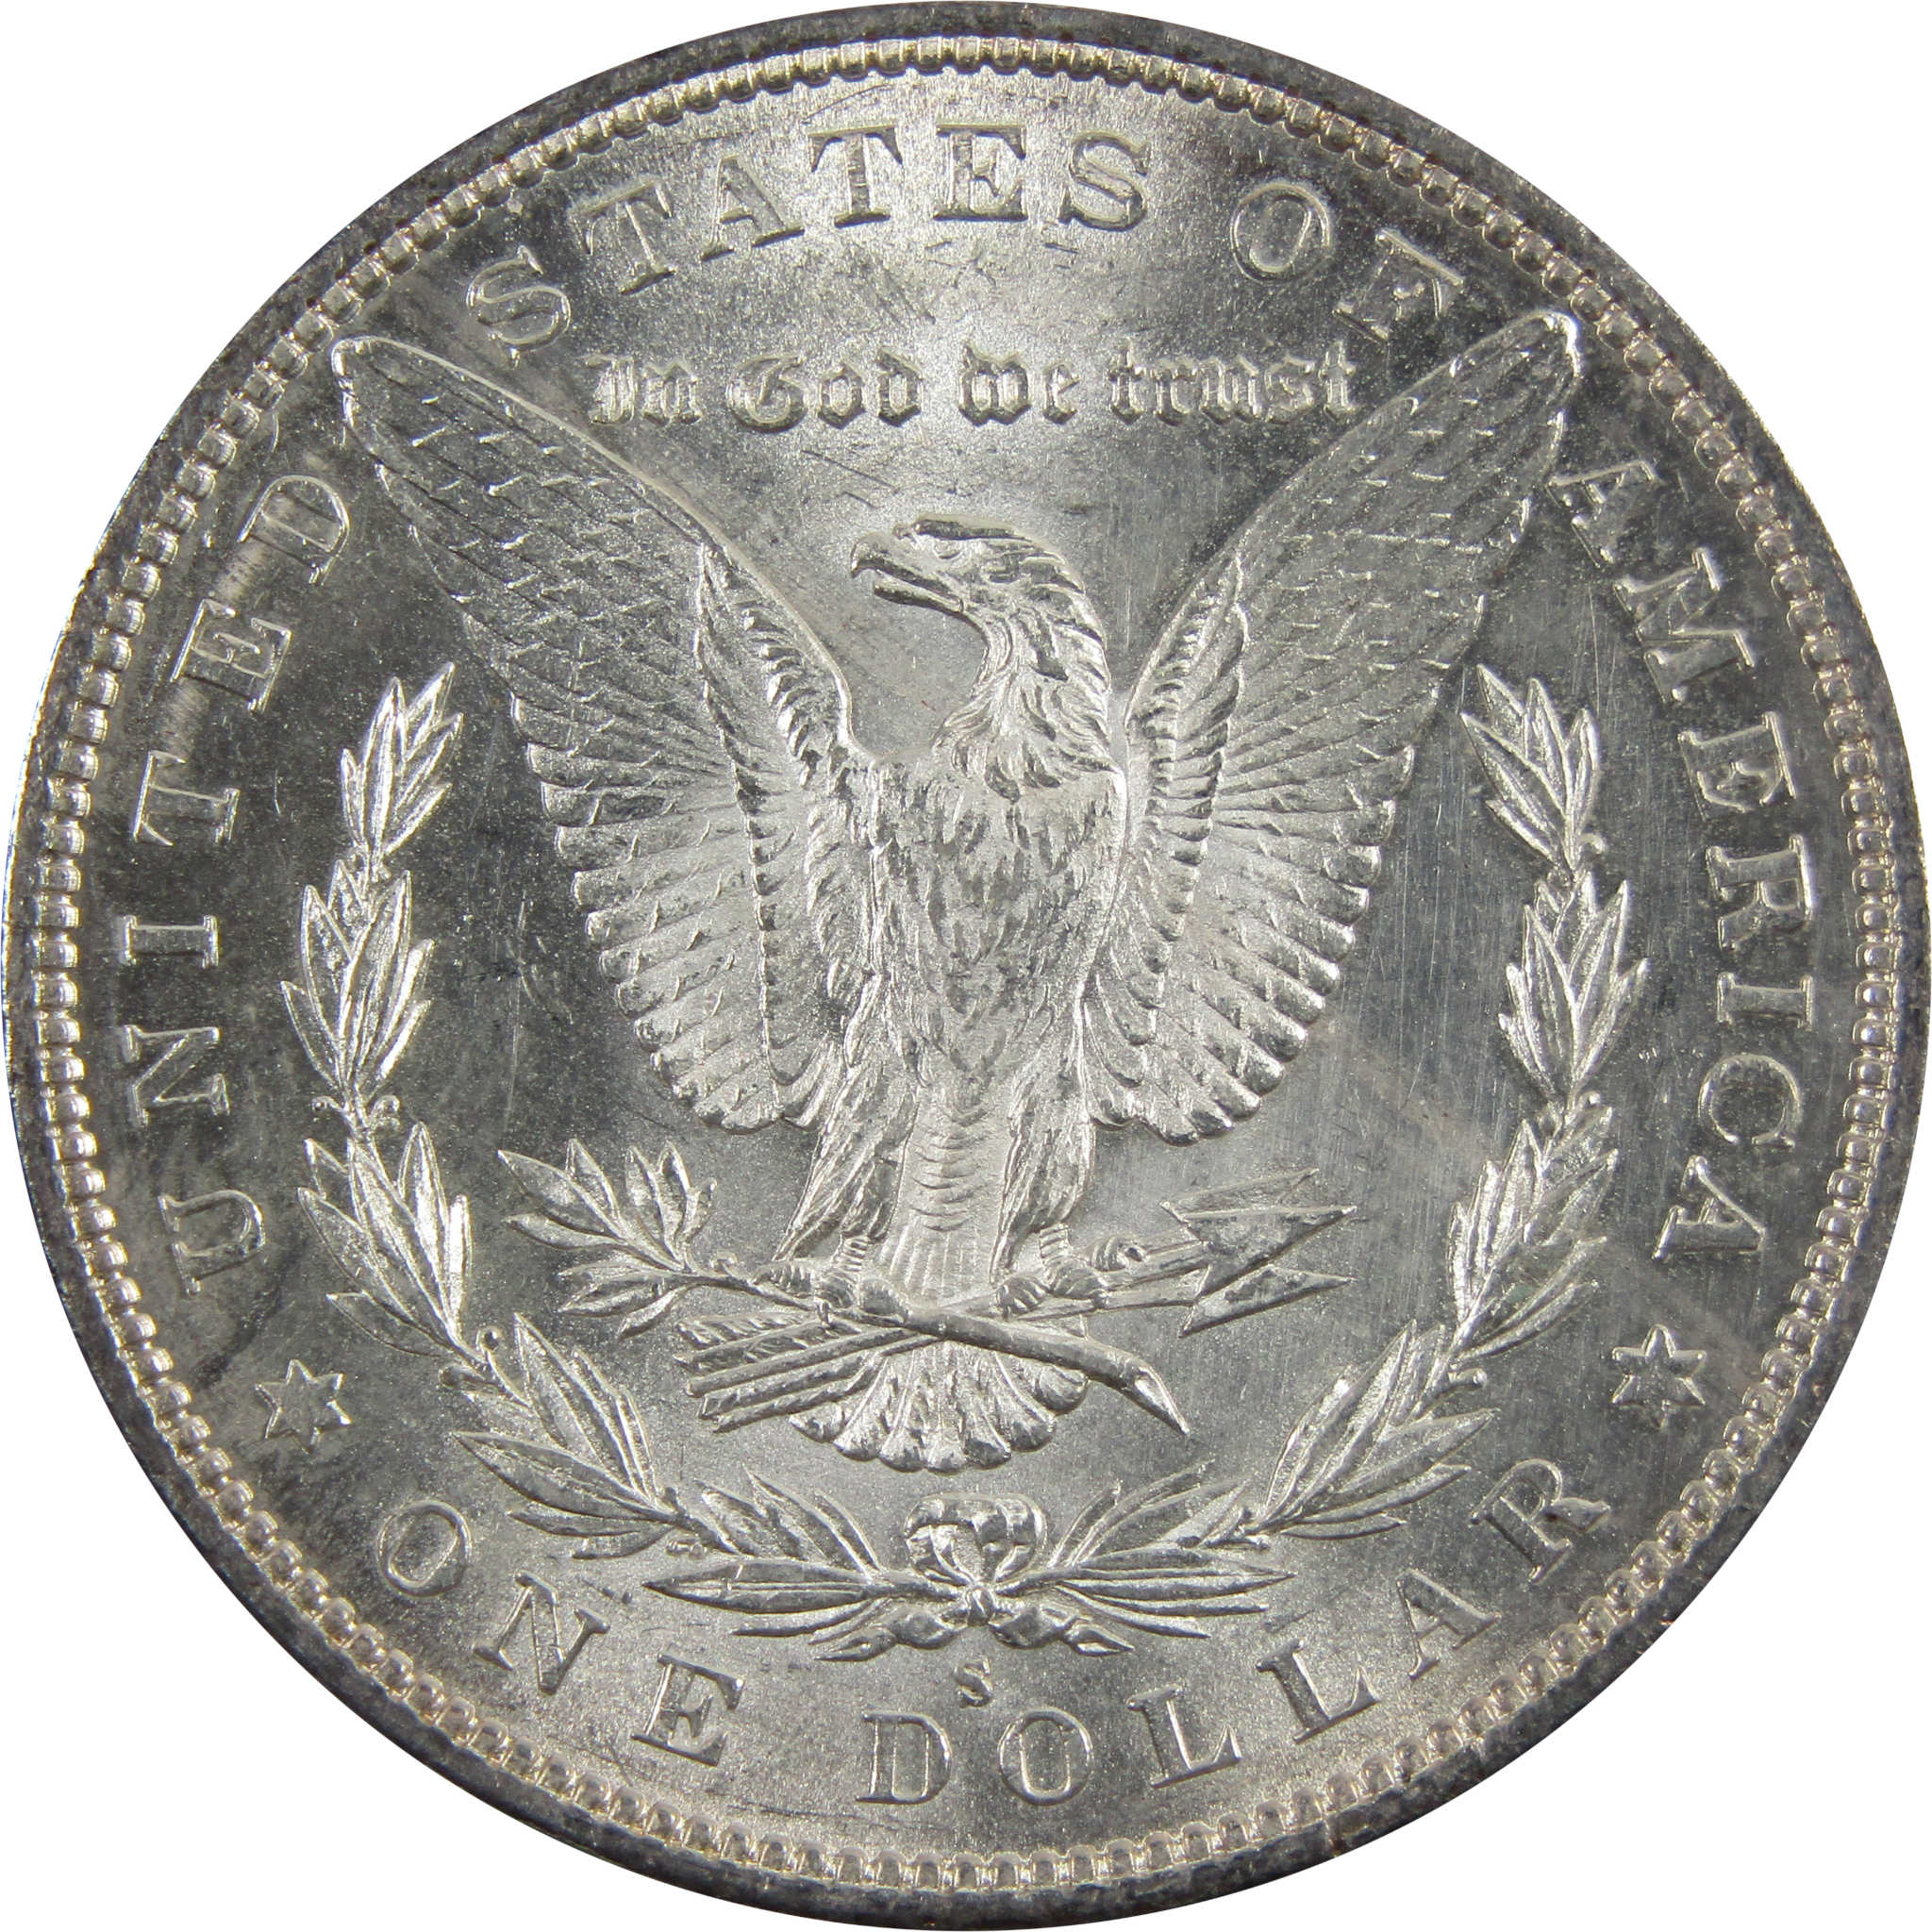 1879 S Morgan Dollar BU Uncirculated 90% Silver $1 Coin SKU:I5188 - Morgan coin - Morgan silver dollar - Morgan silver dollar for sale - Profile Coins &amp; Collectibles